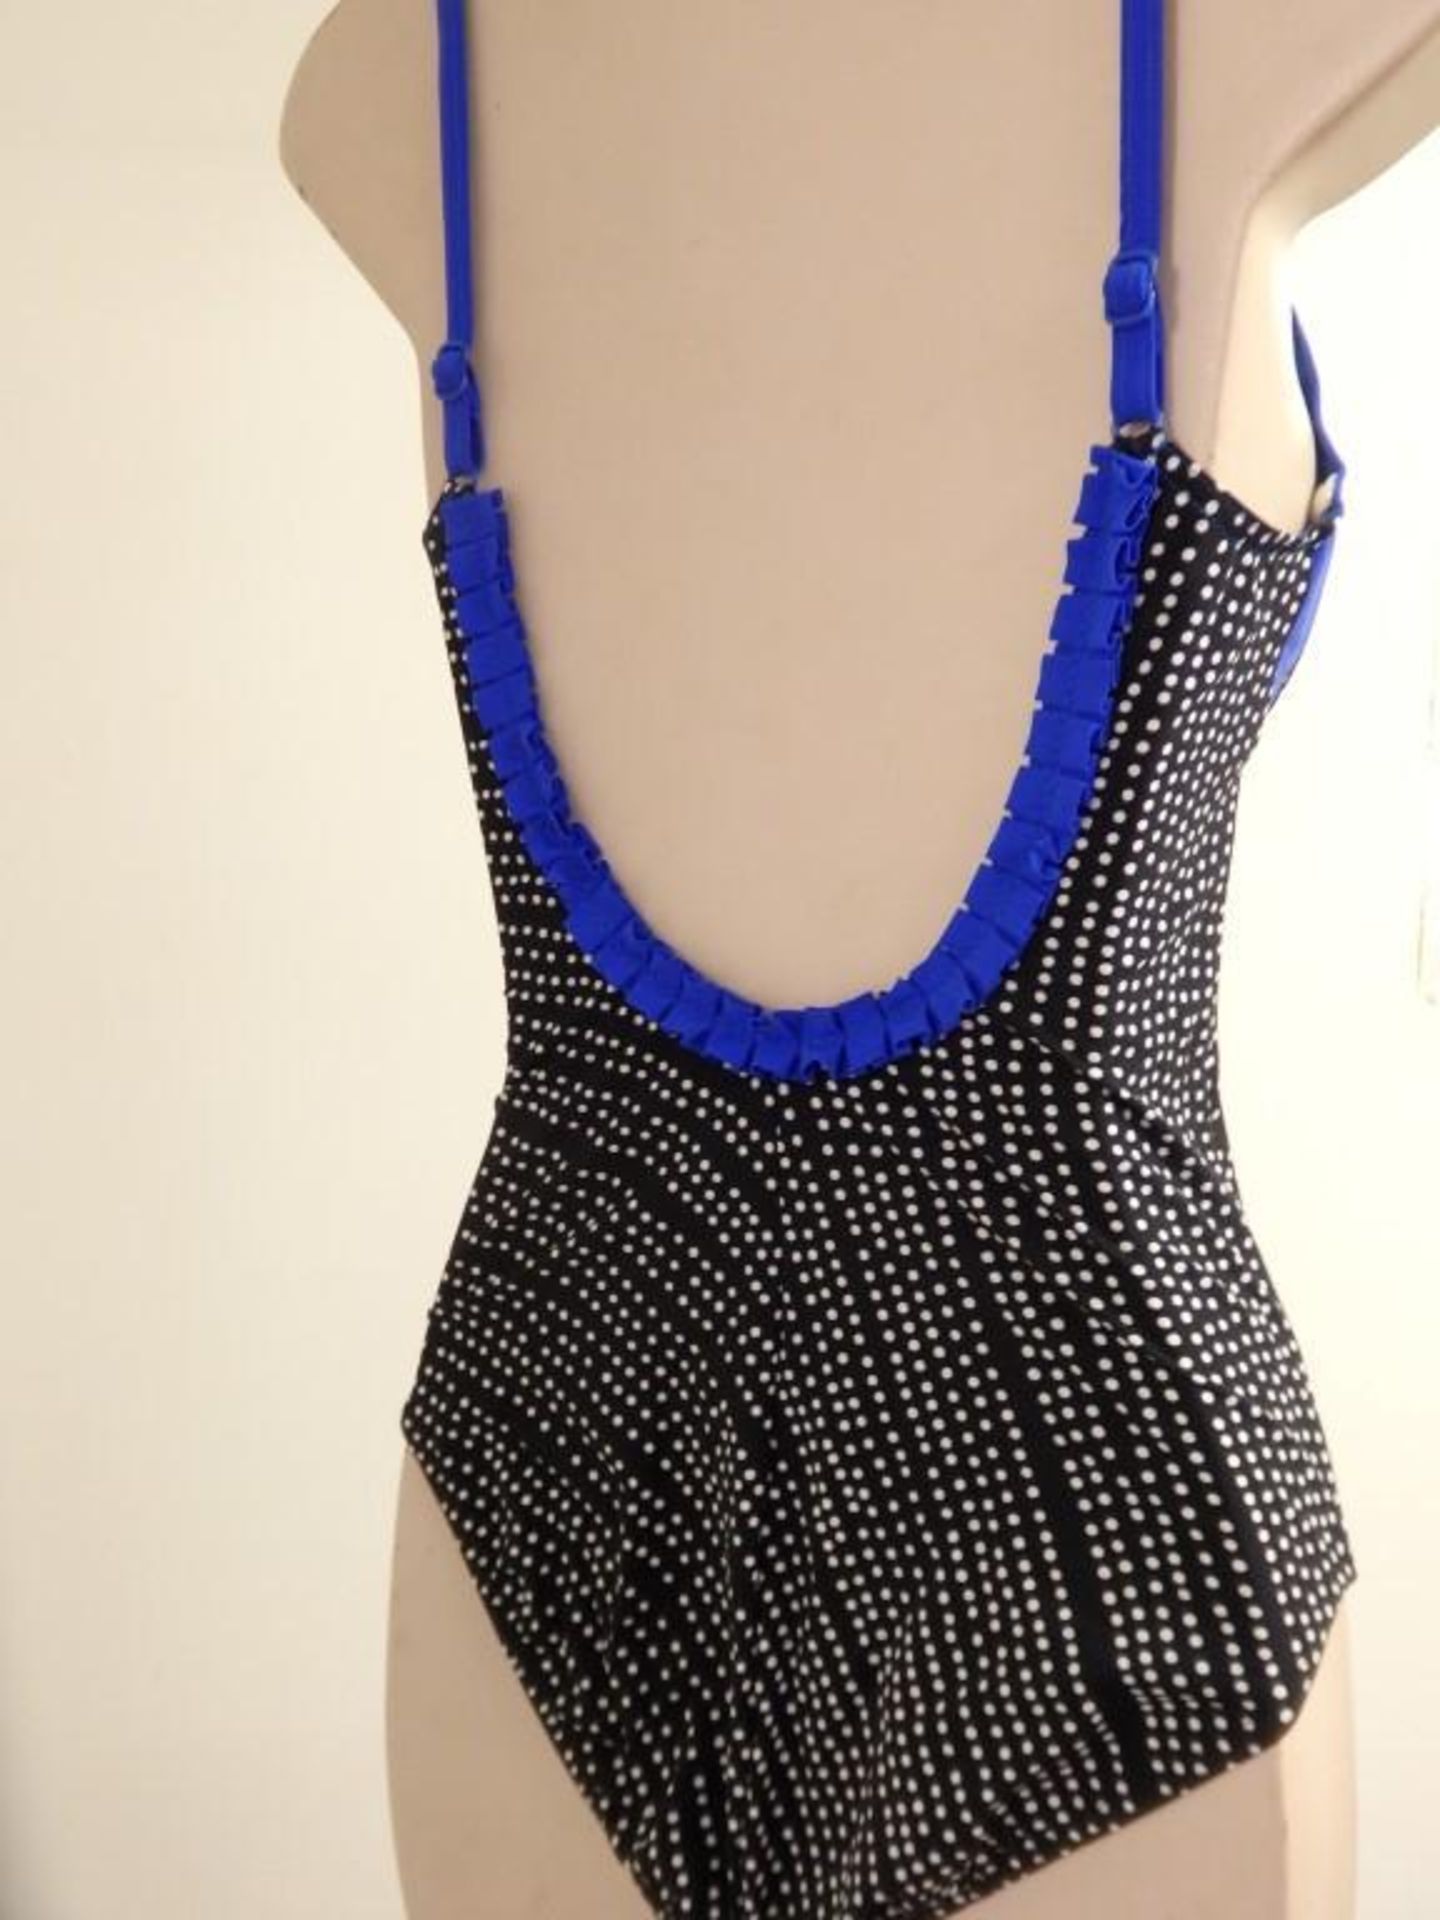 1 x Rasurel - Black Polka dot with royal blue trim &frill Tobago Swimsuit - B21039 - Size 2C - UK 32 - Image 3 of 8